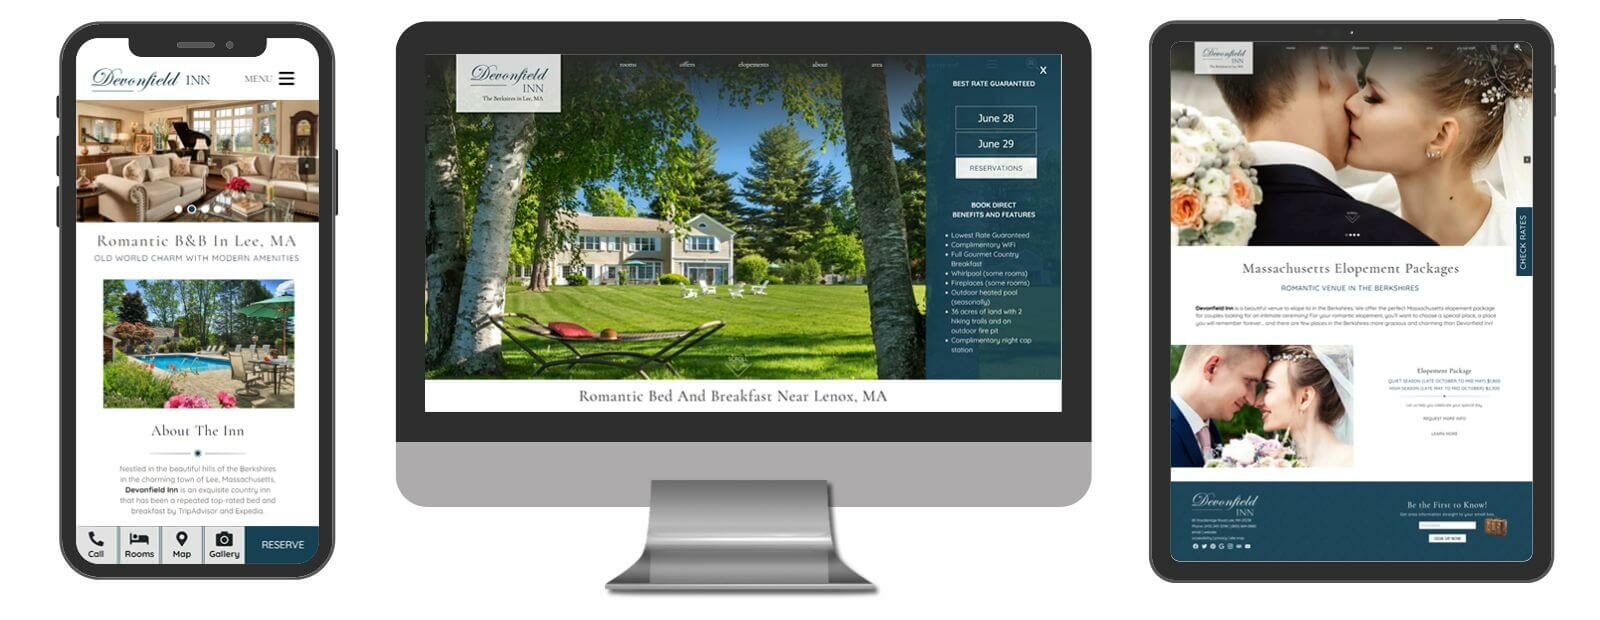 Screenshot of Desktop, Mobile and tablet views of the website for Devonfield Inn website